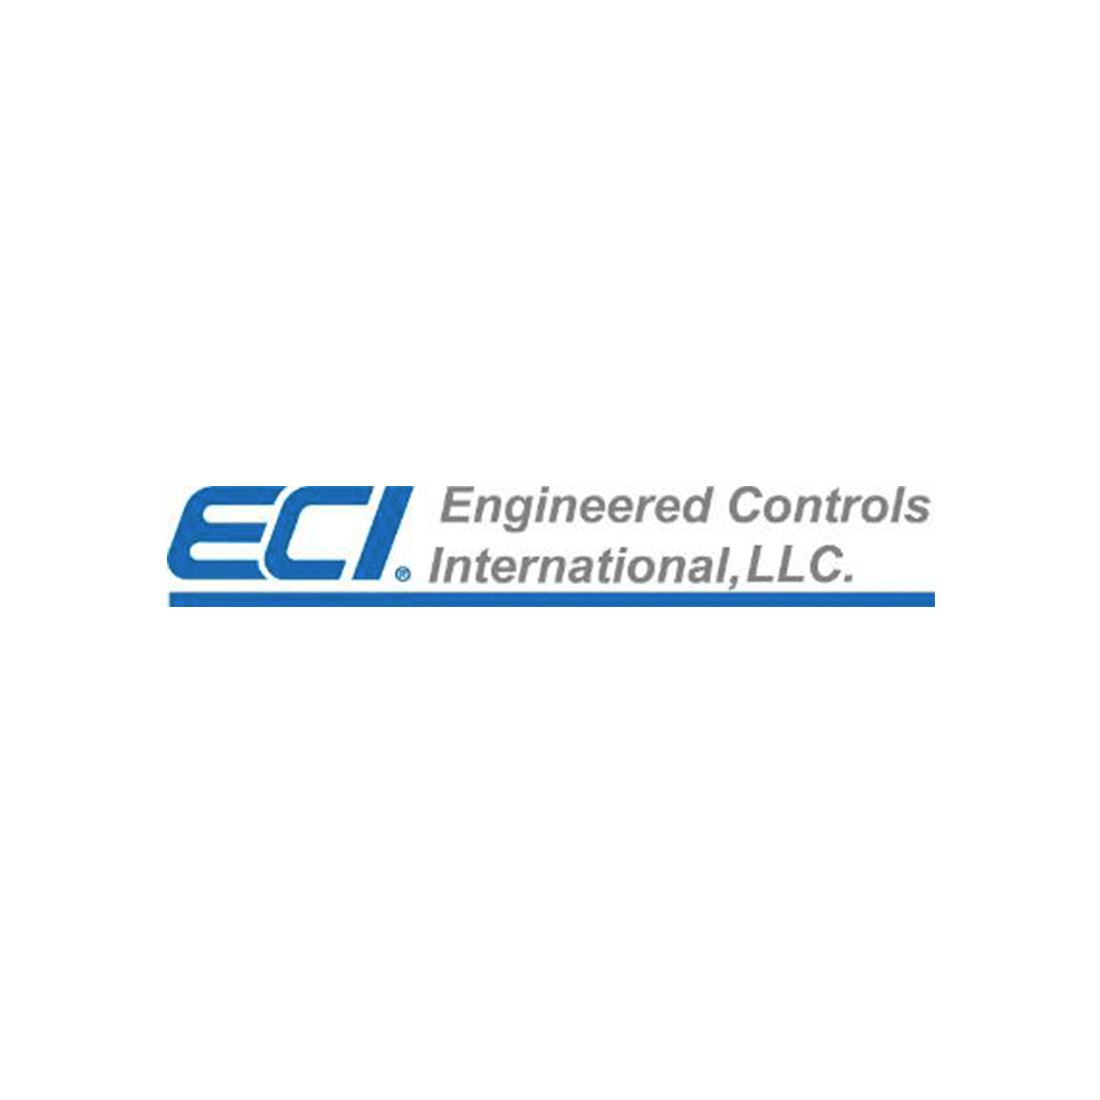 Engineered Controls International